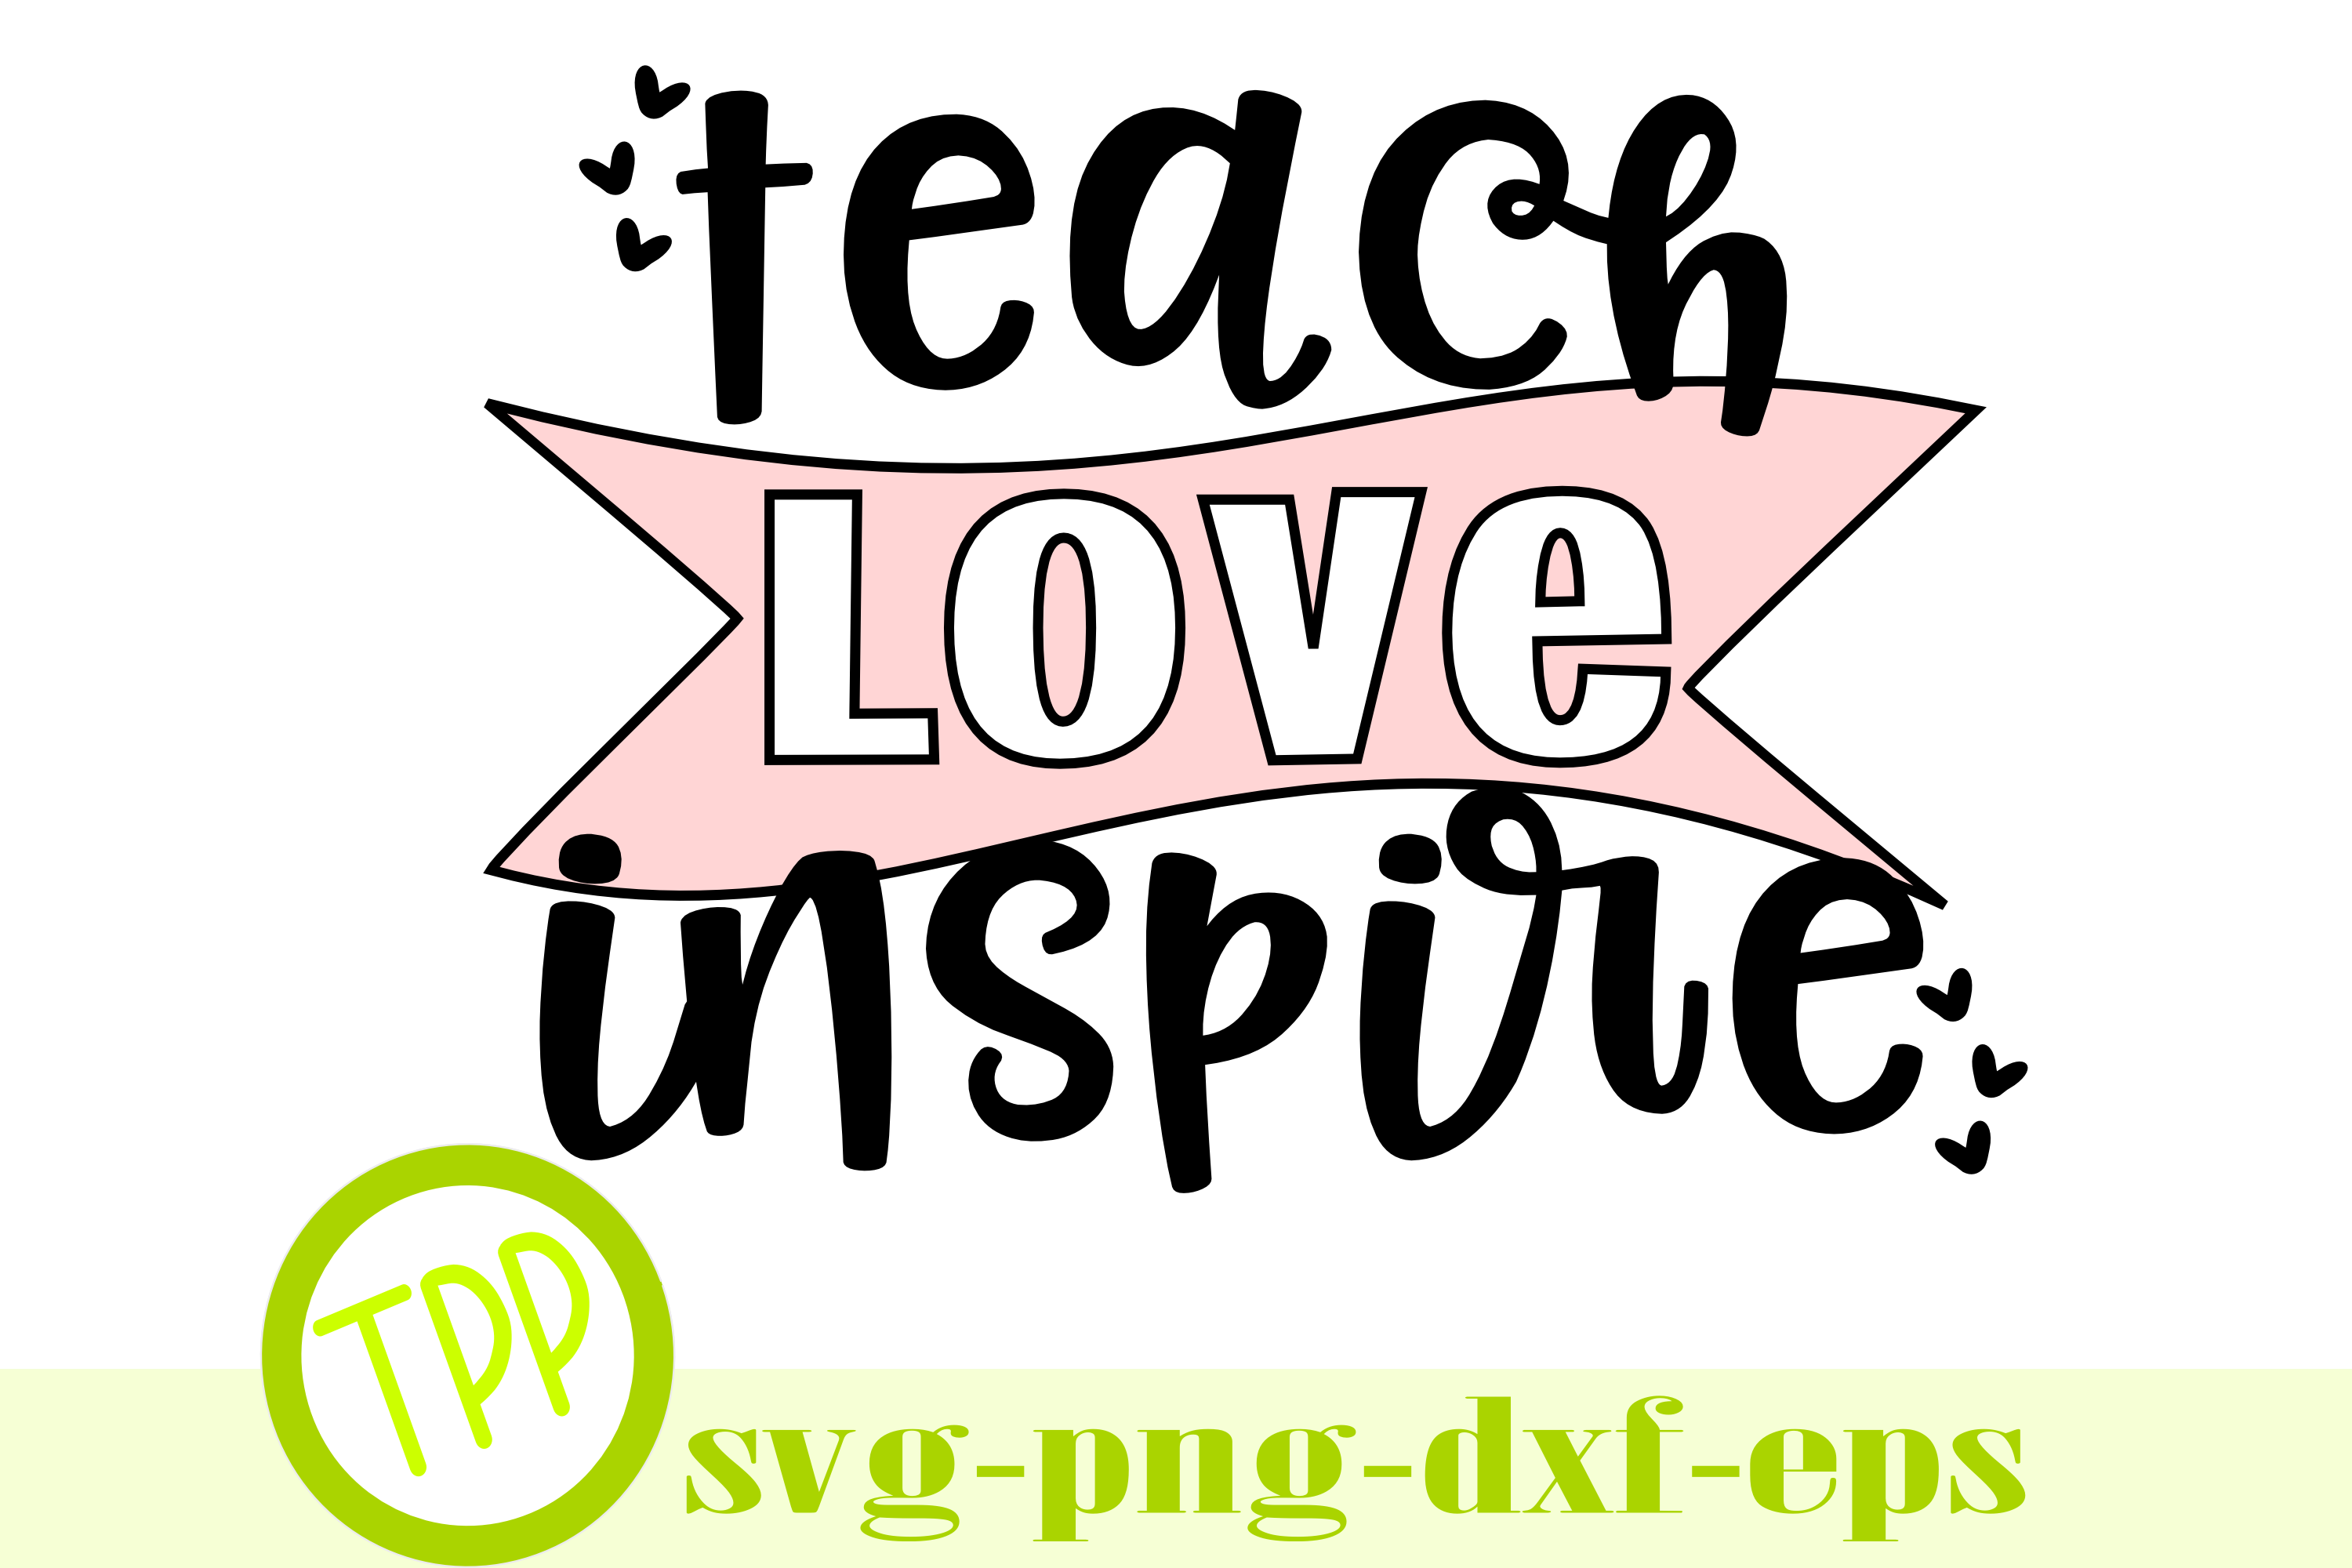 Free Free 222 Teacher Svg Teach Love Inspire SVG PNG EPS DXF File